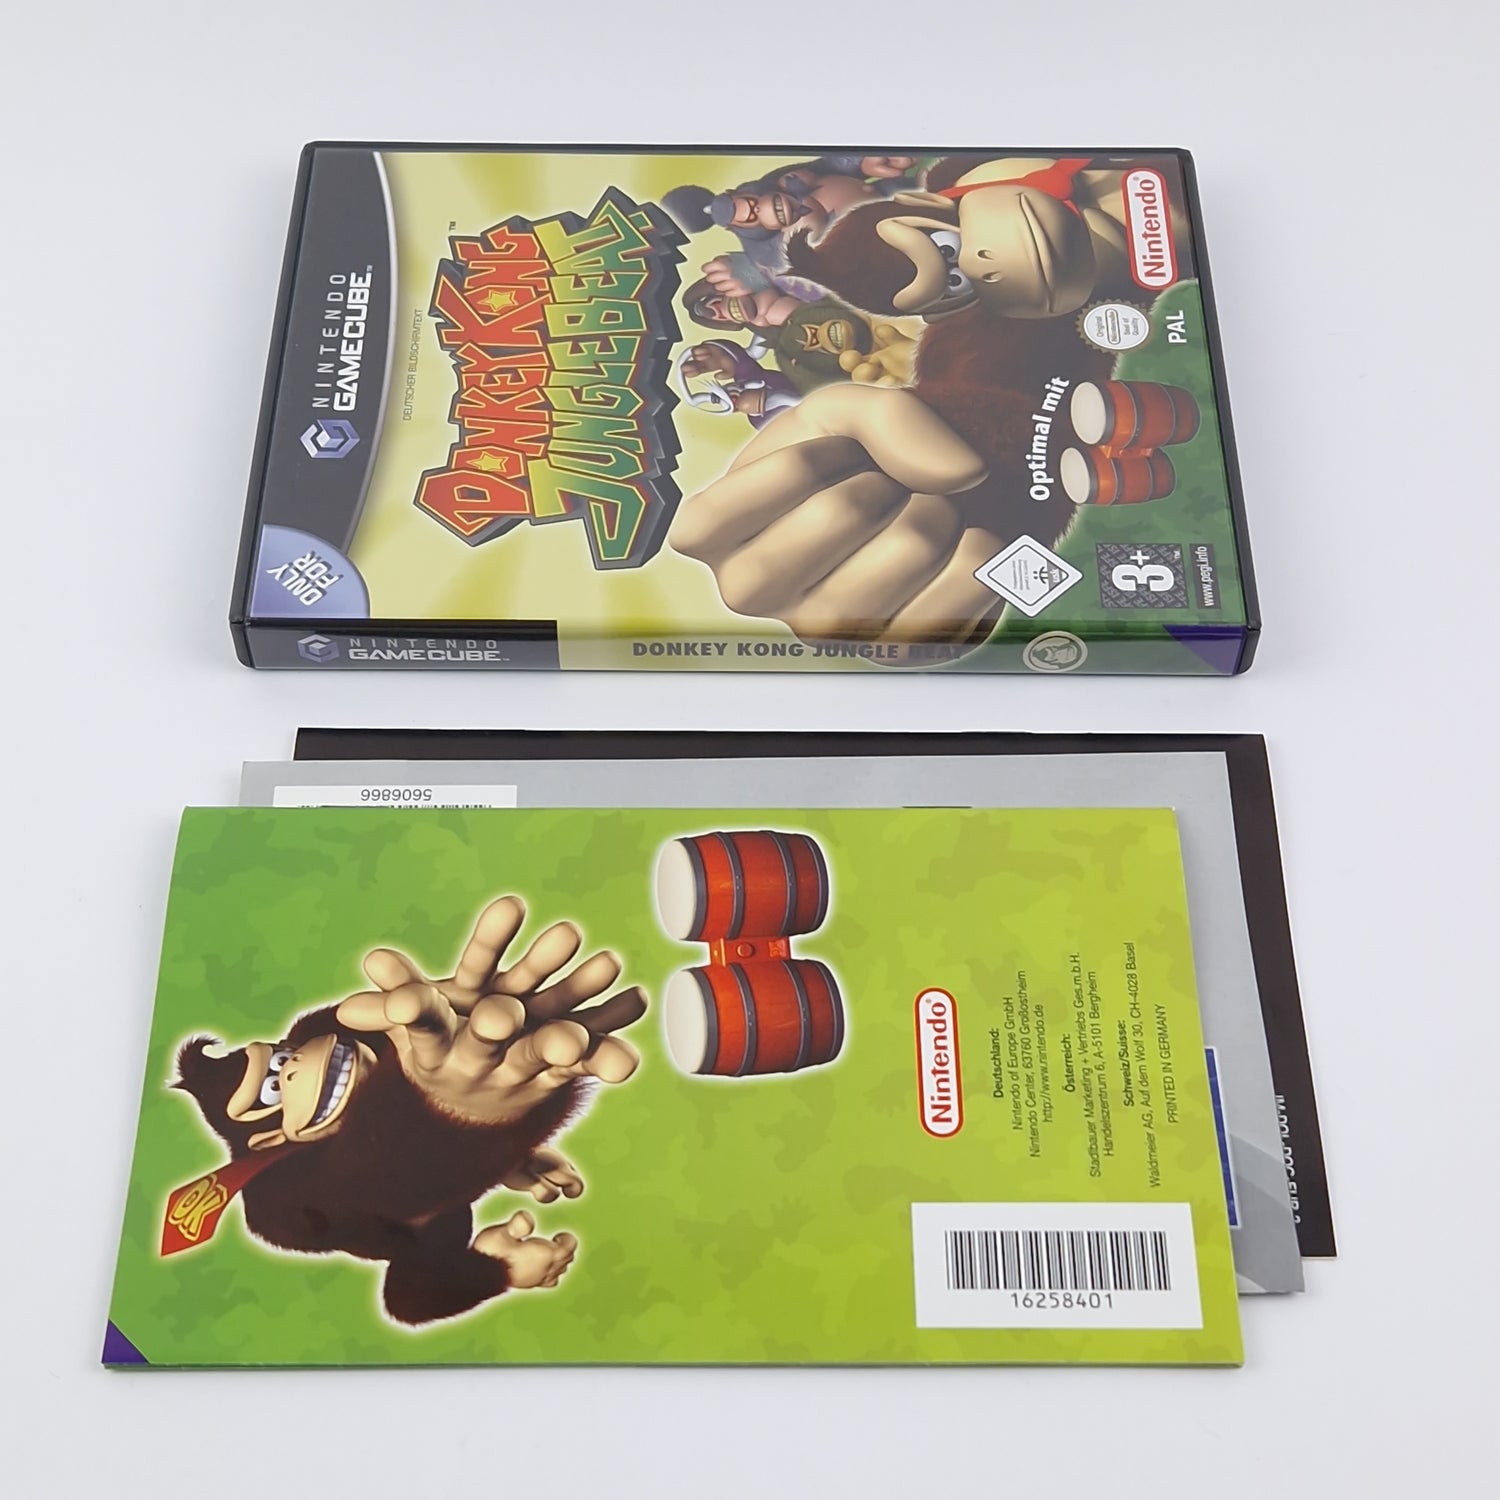 Nintendo Gamecube game: Donkey Kong Jungle Beat - OVP instructions PAL